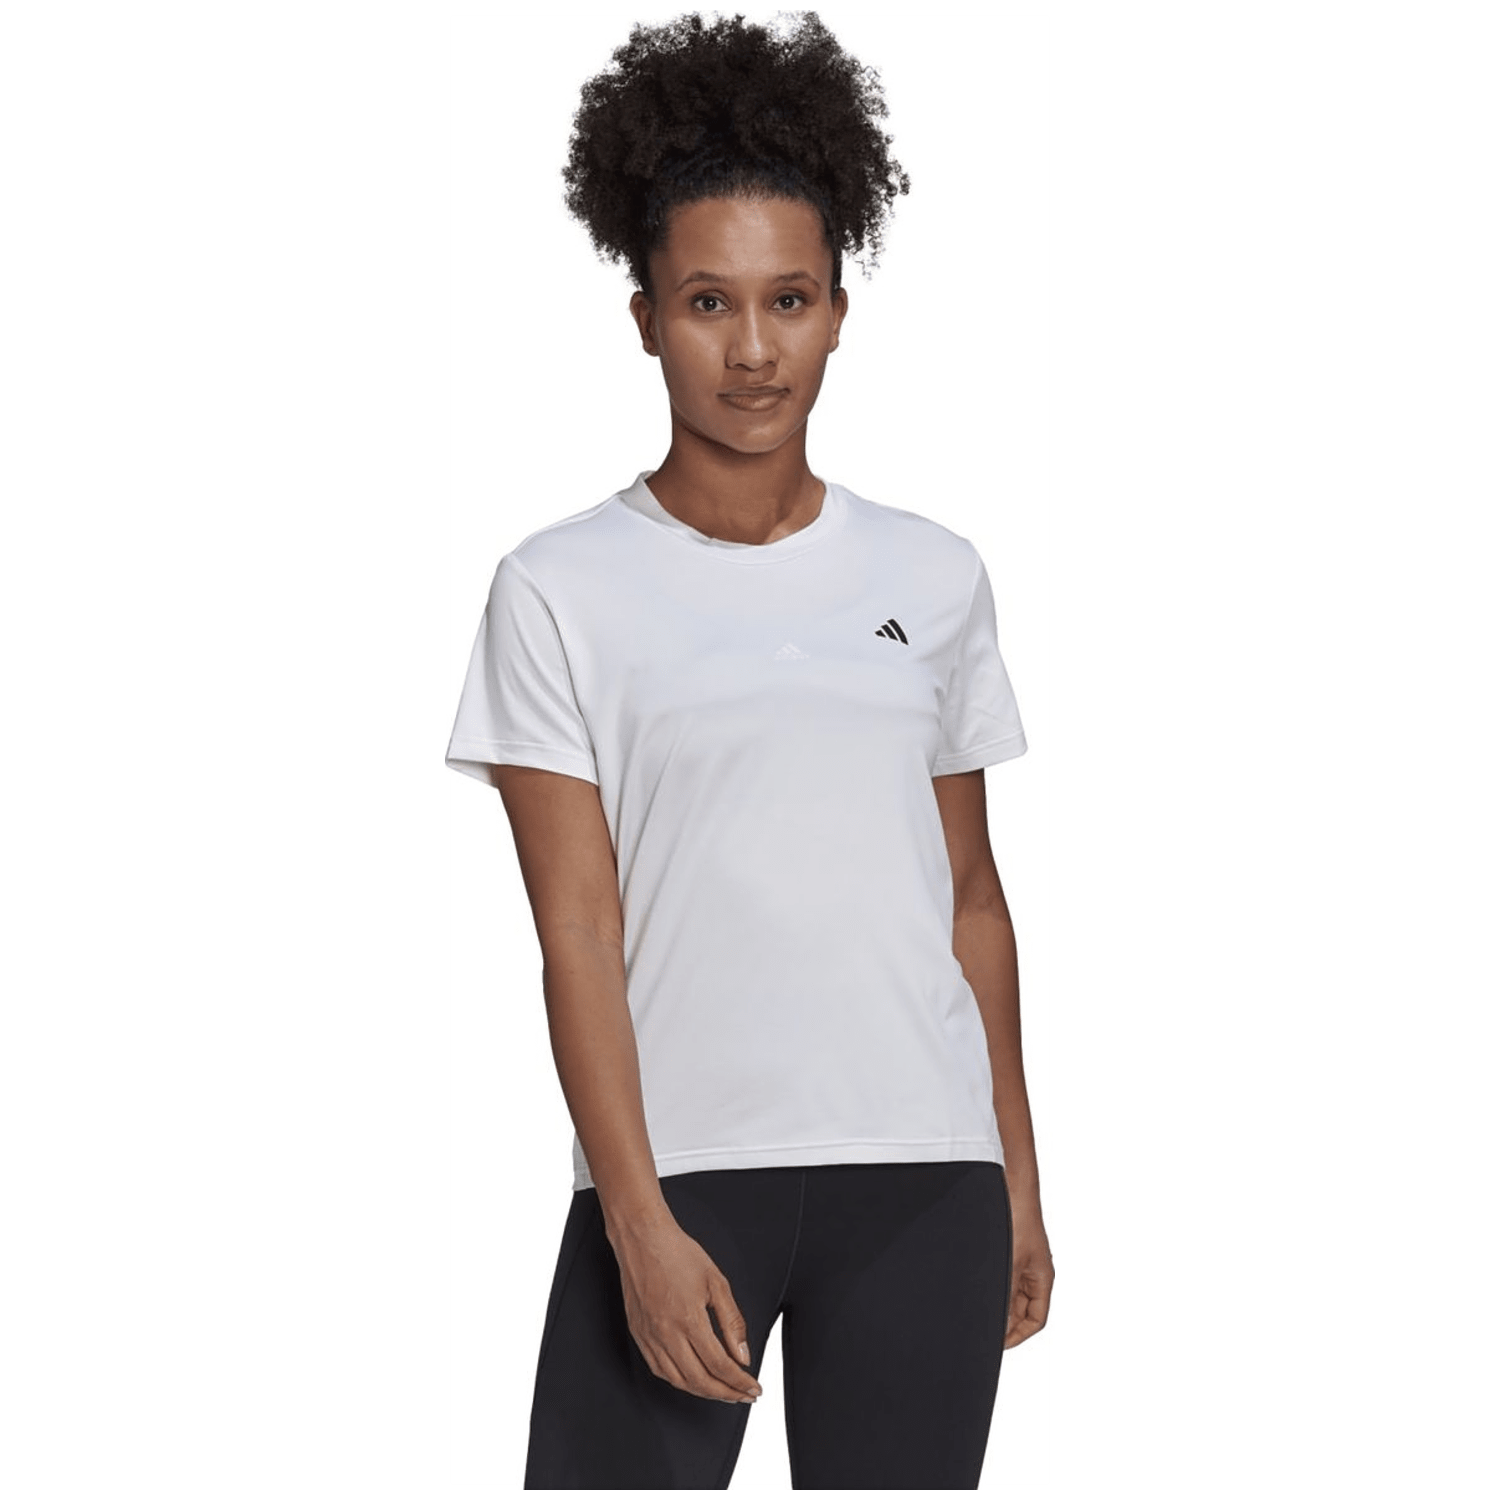 Adidas AEROREADY Made for Training Minimal T-Shirt Damen